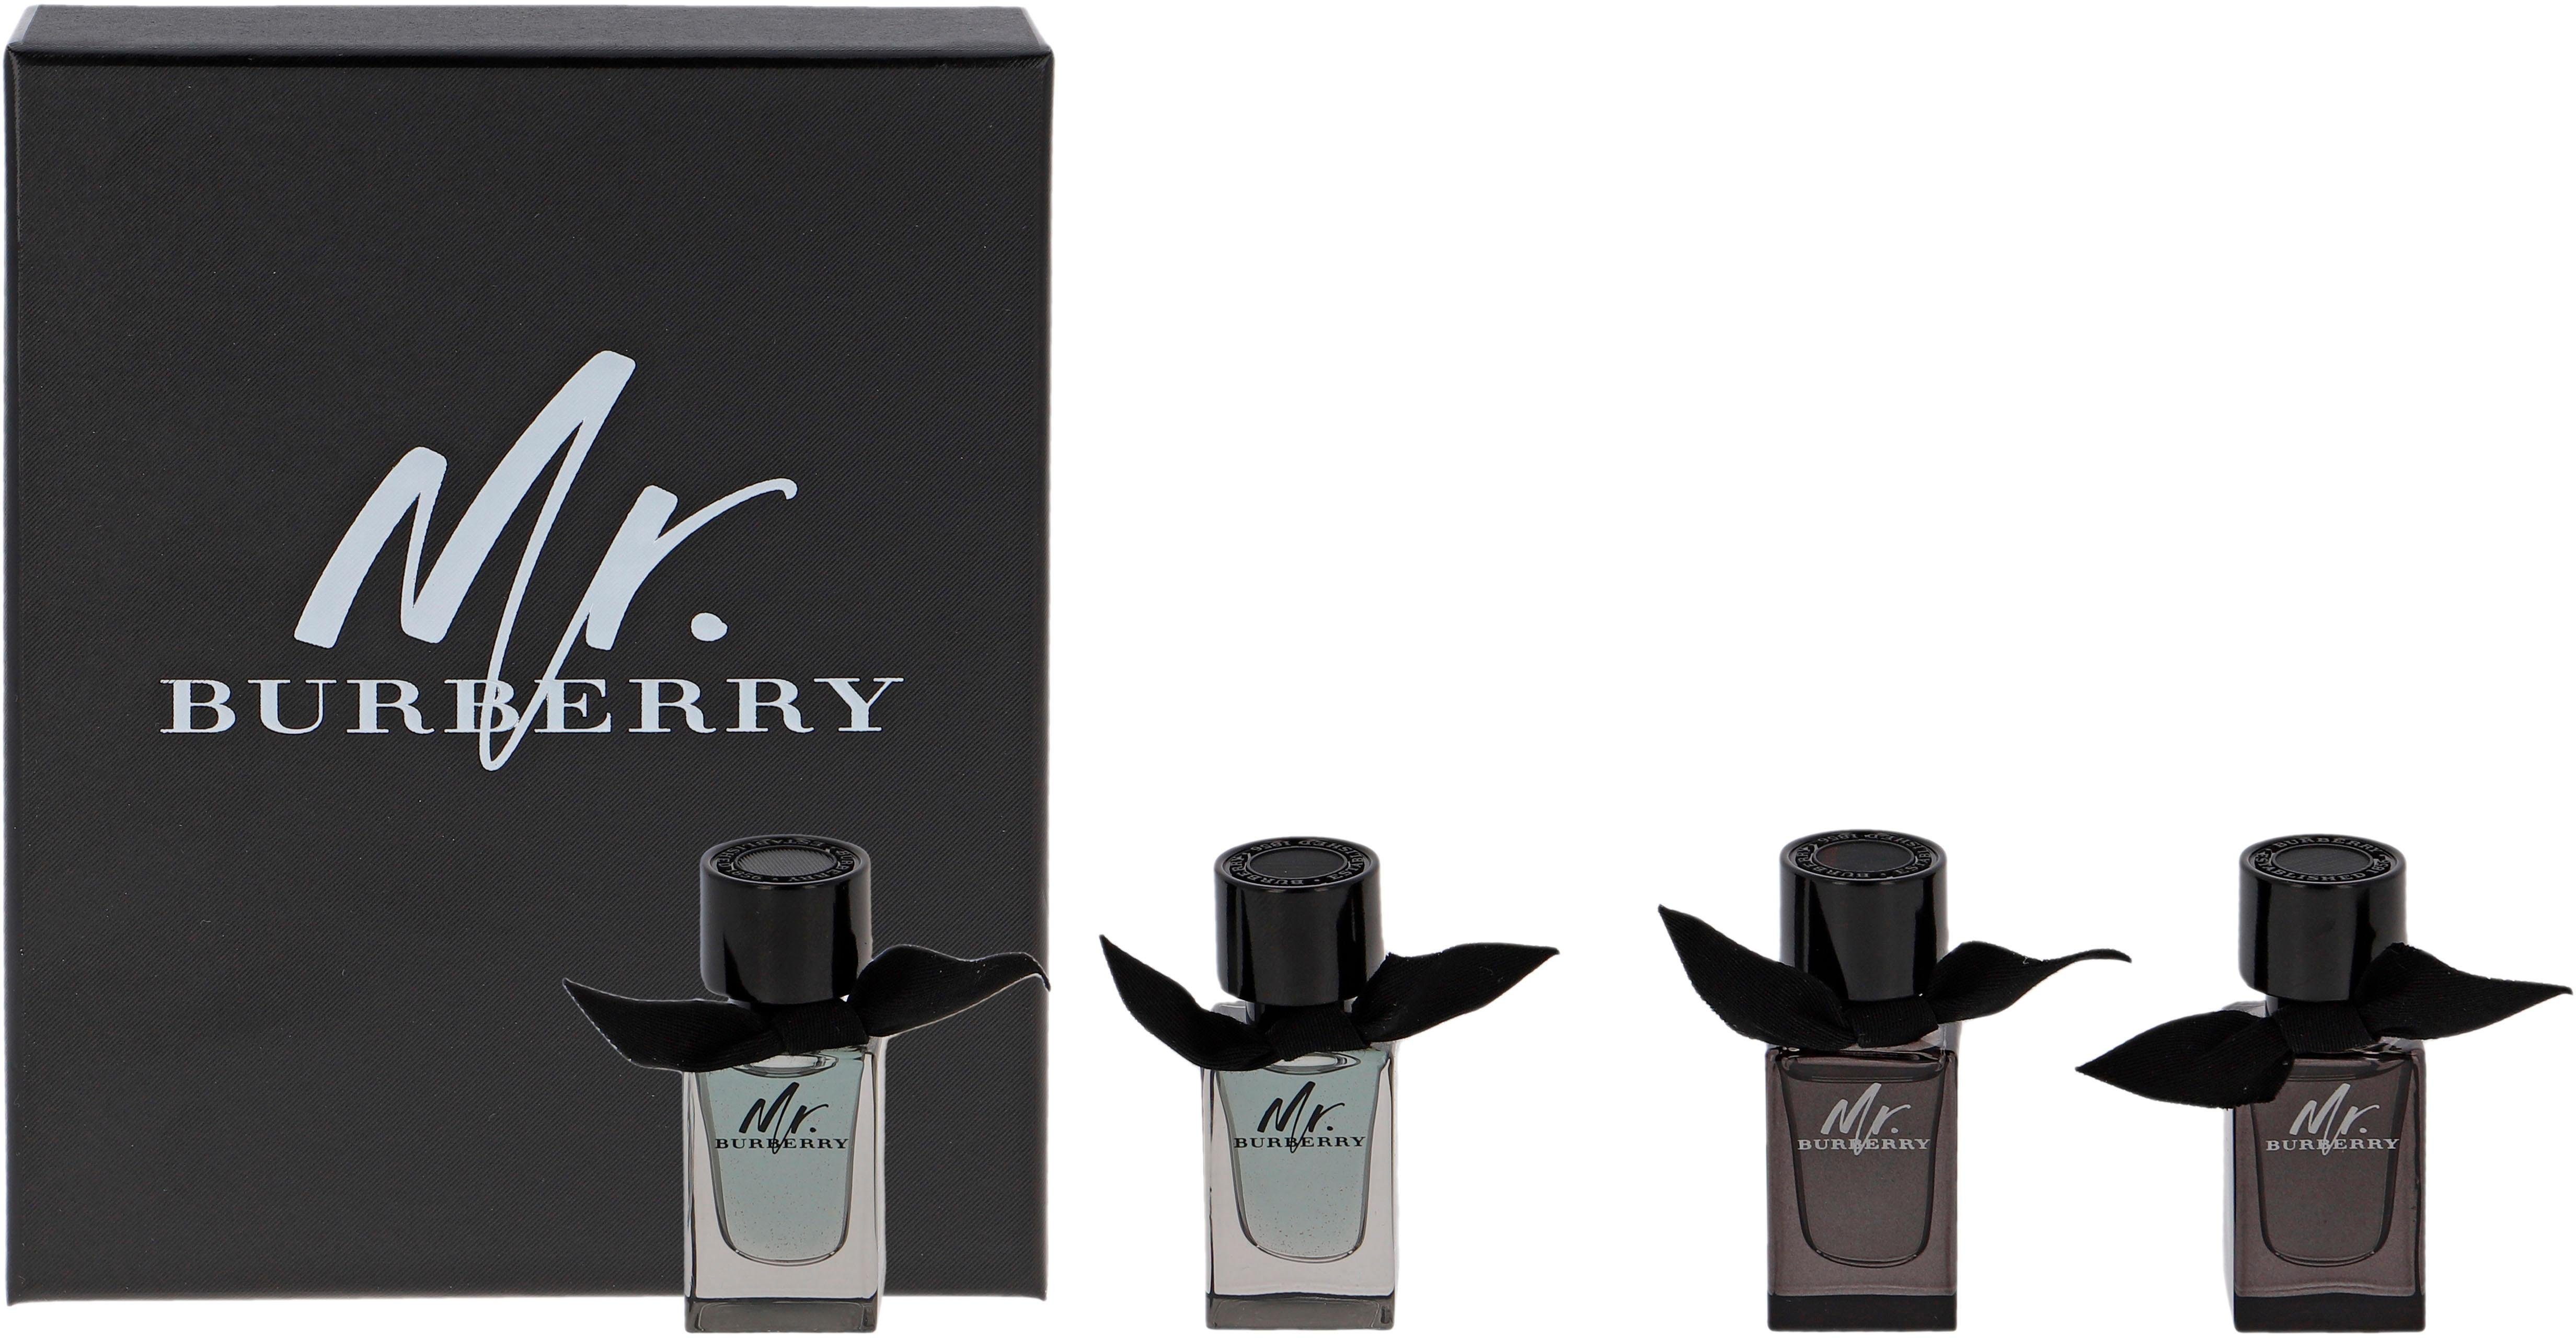 BURBERRY Duft-Set »Mr Burberry Mini Collection«, 4-tlg. online kaufen | OTTO